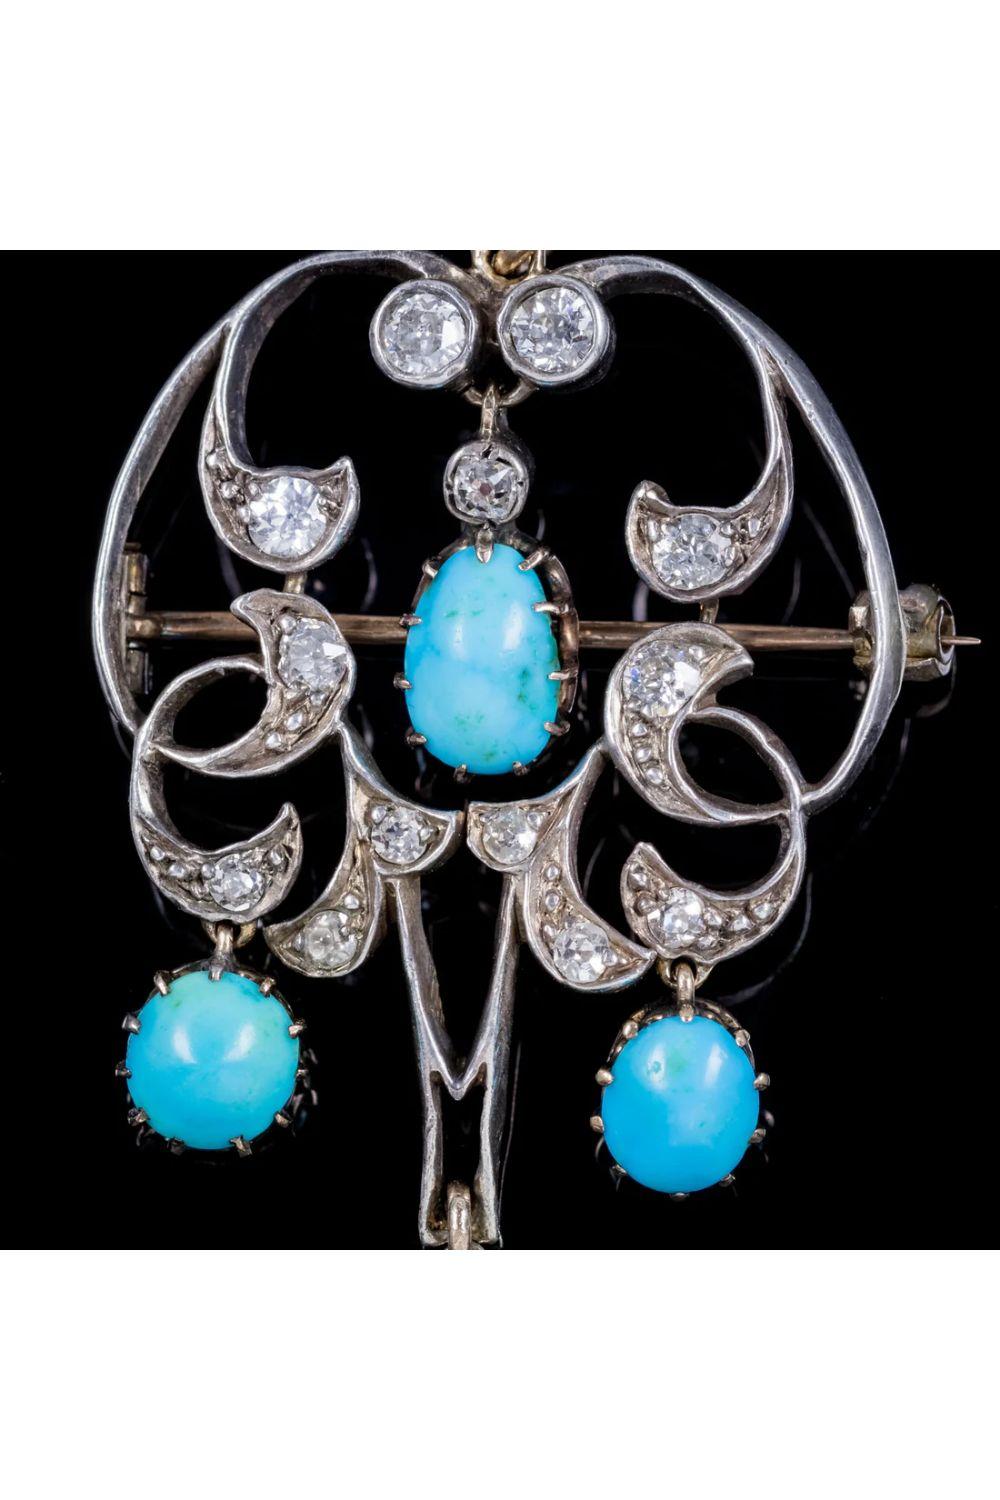 Women's Art Nouveau Turquoise Diamond Pendant Silver in 18 Carat Gold, circa 1901 – 1915 For Sale